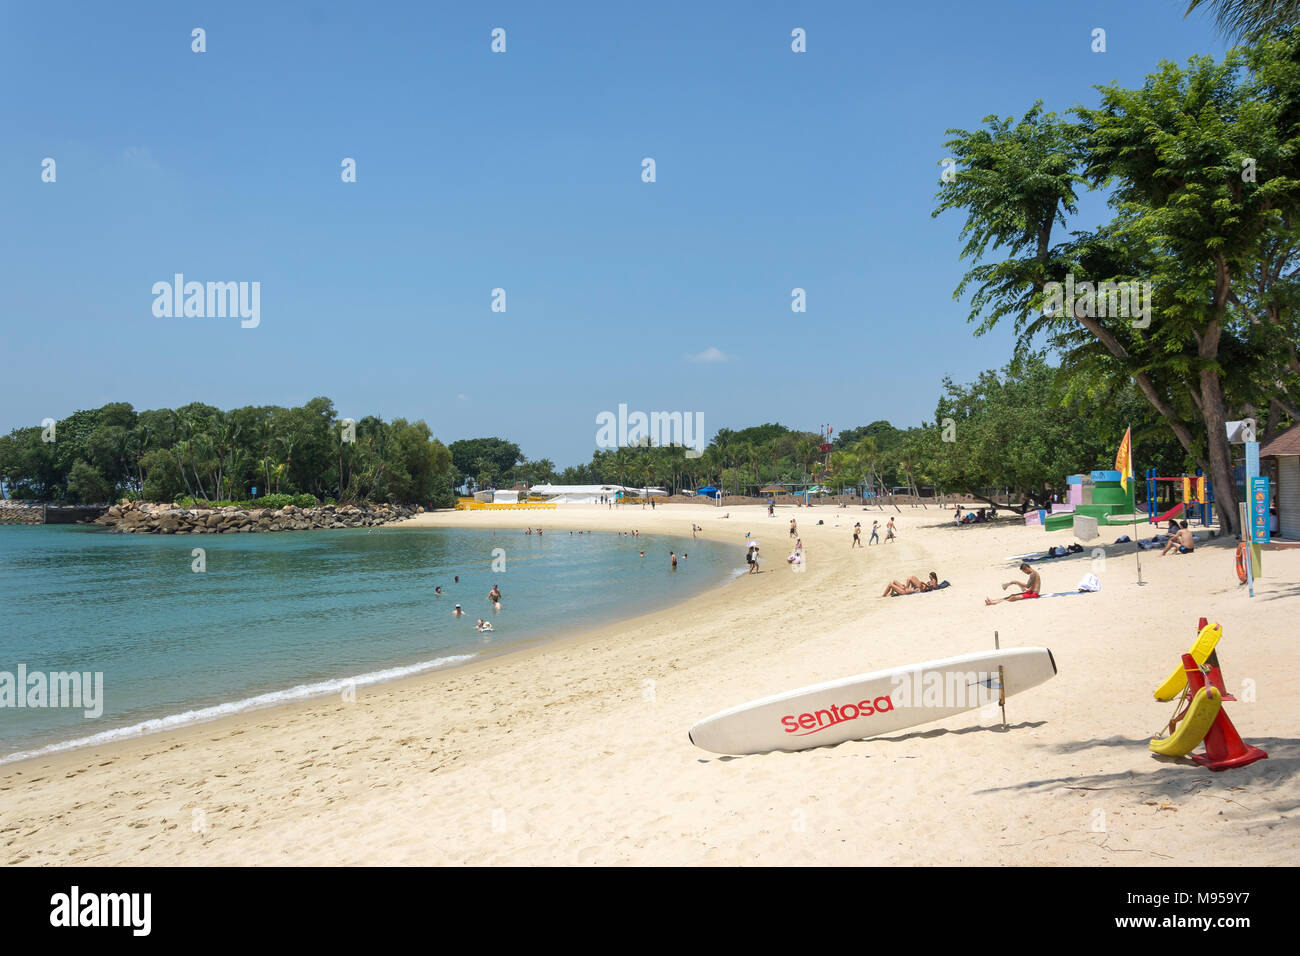 Palawan Beach, Sentosa Island, Central Region, Singapore Island (Pulau Ujong), Singapore Stock Photo